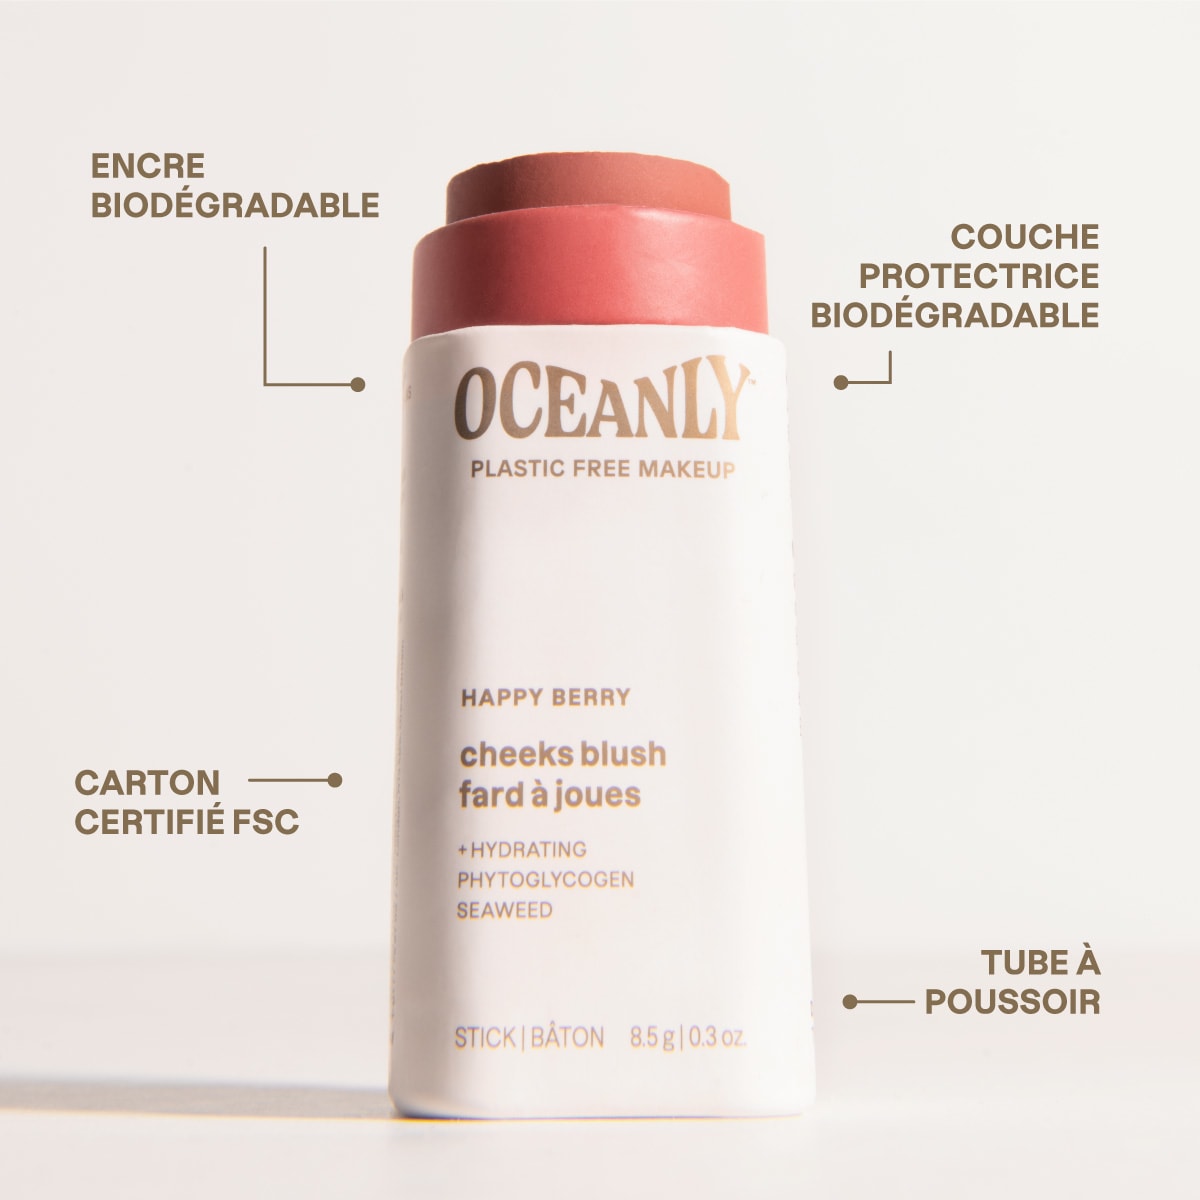 packaging oceanly makeup ATTITUDE